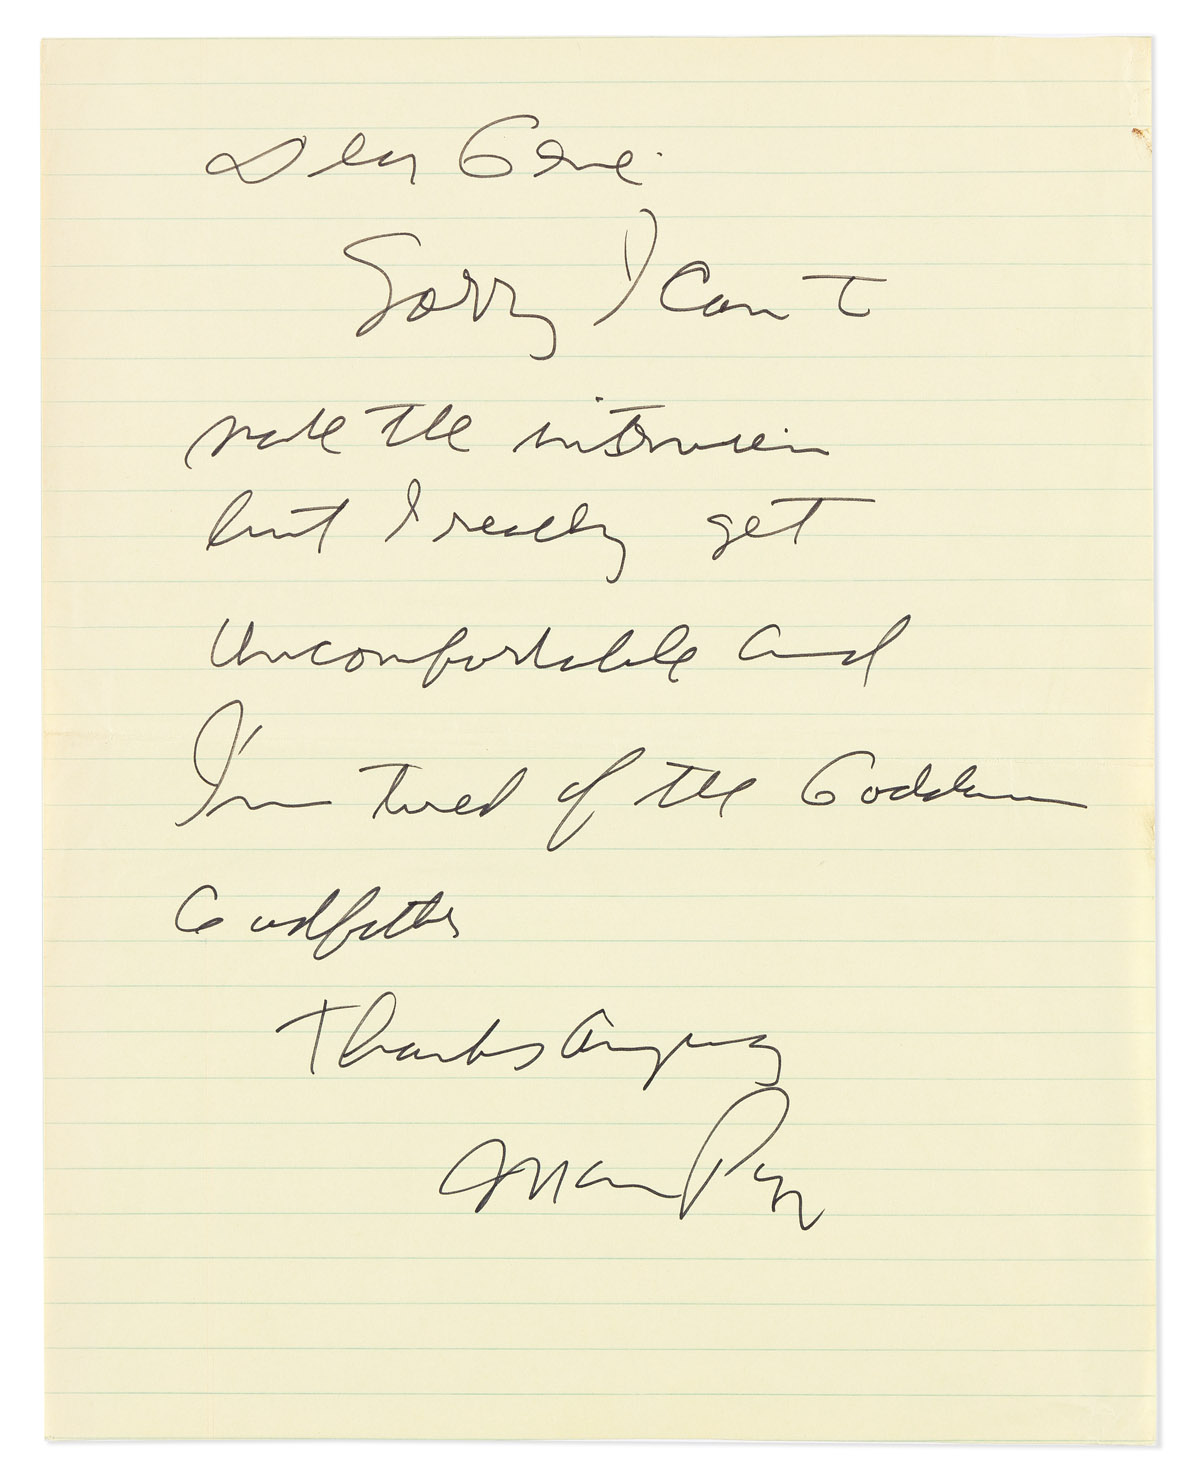 PUZO, MARIO. Brief Autograph Letter Signed, to Dear Gene: